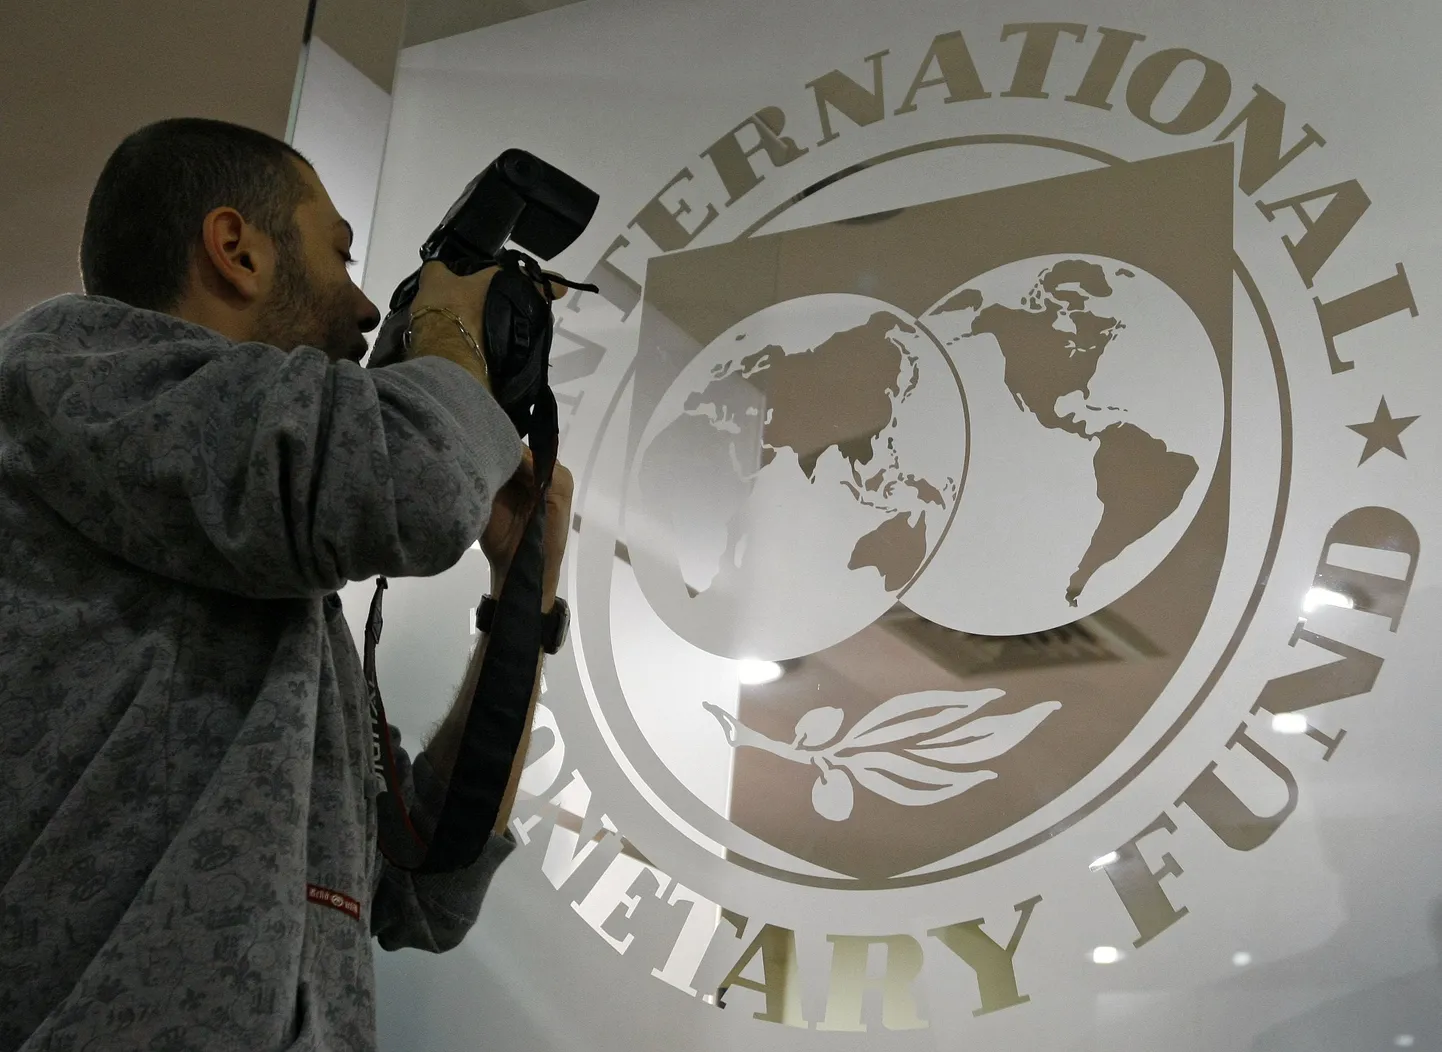 IMFi logo.